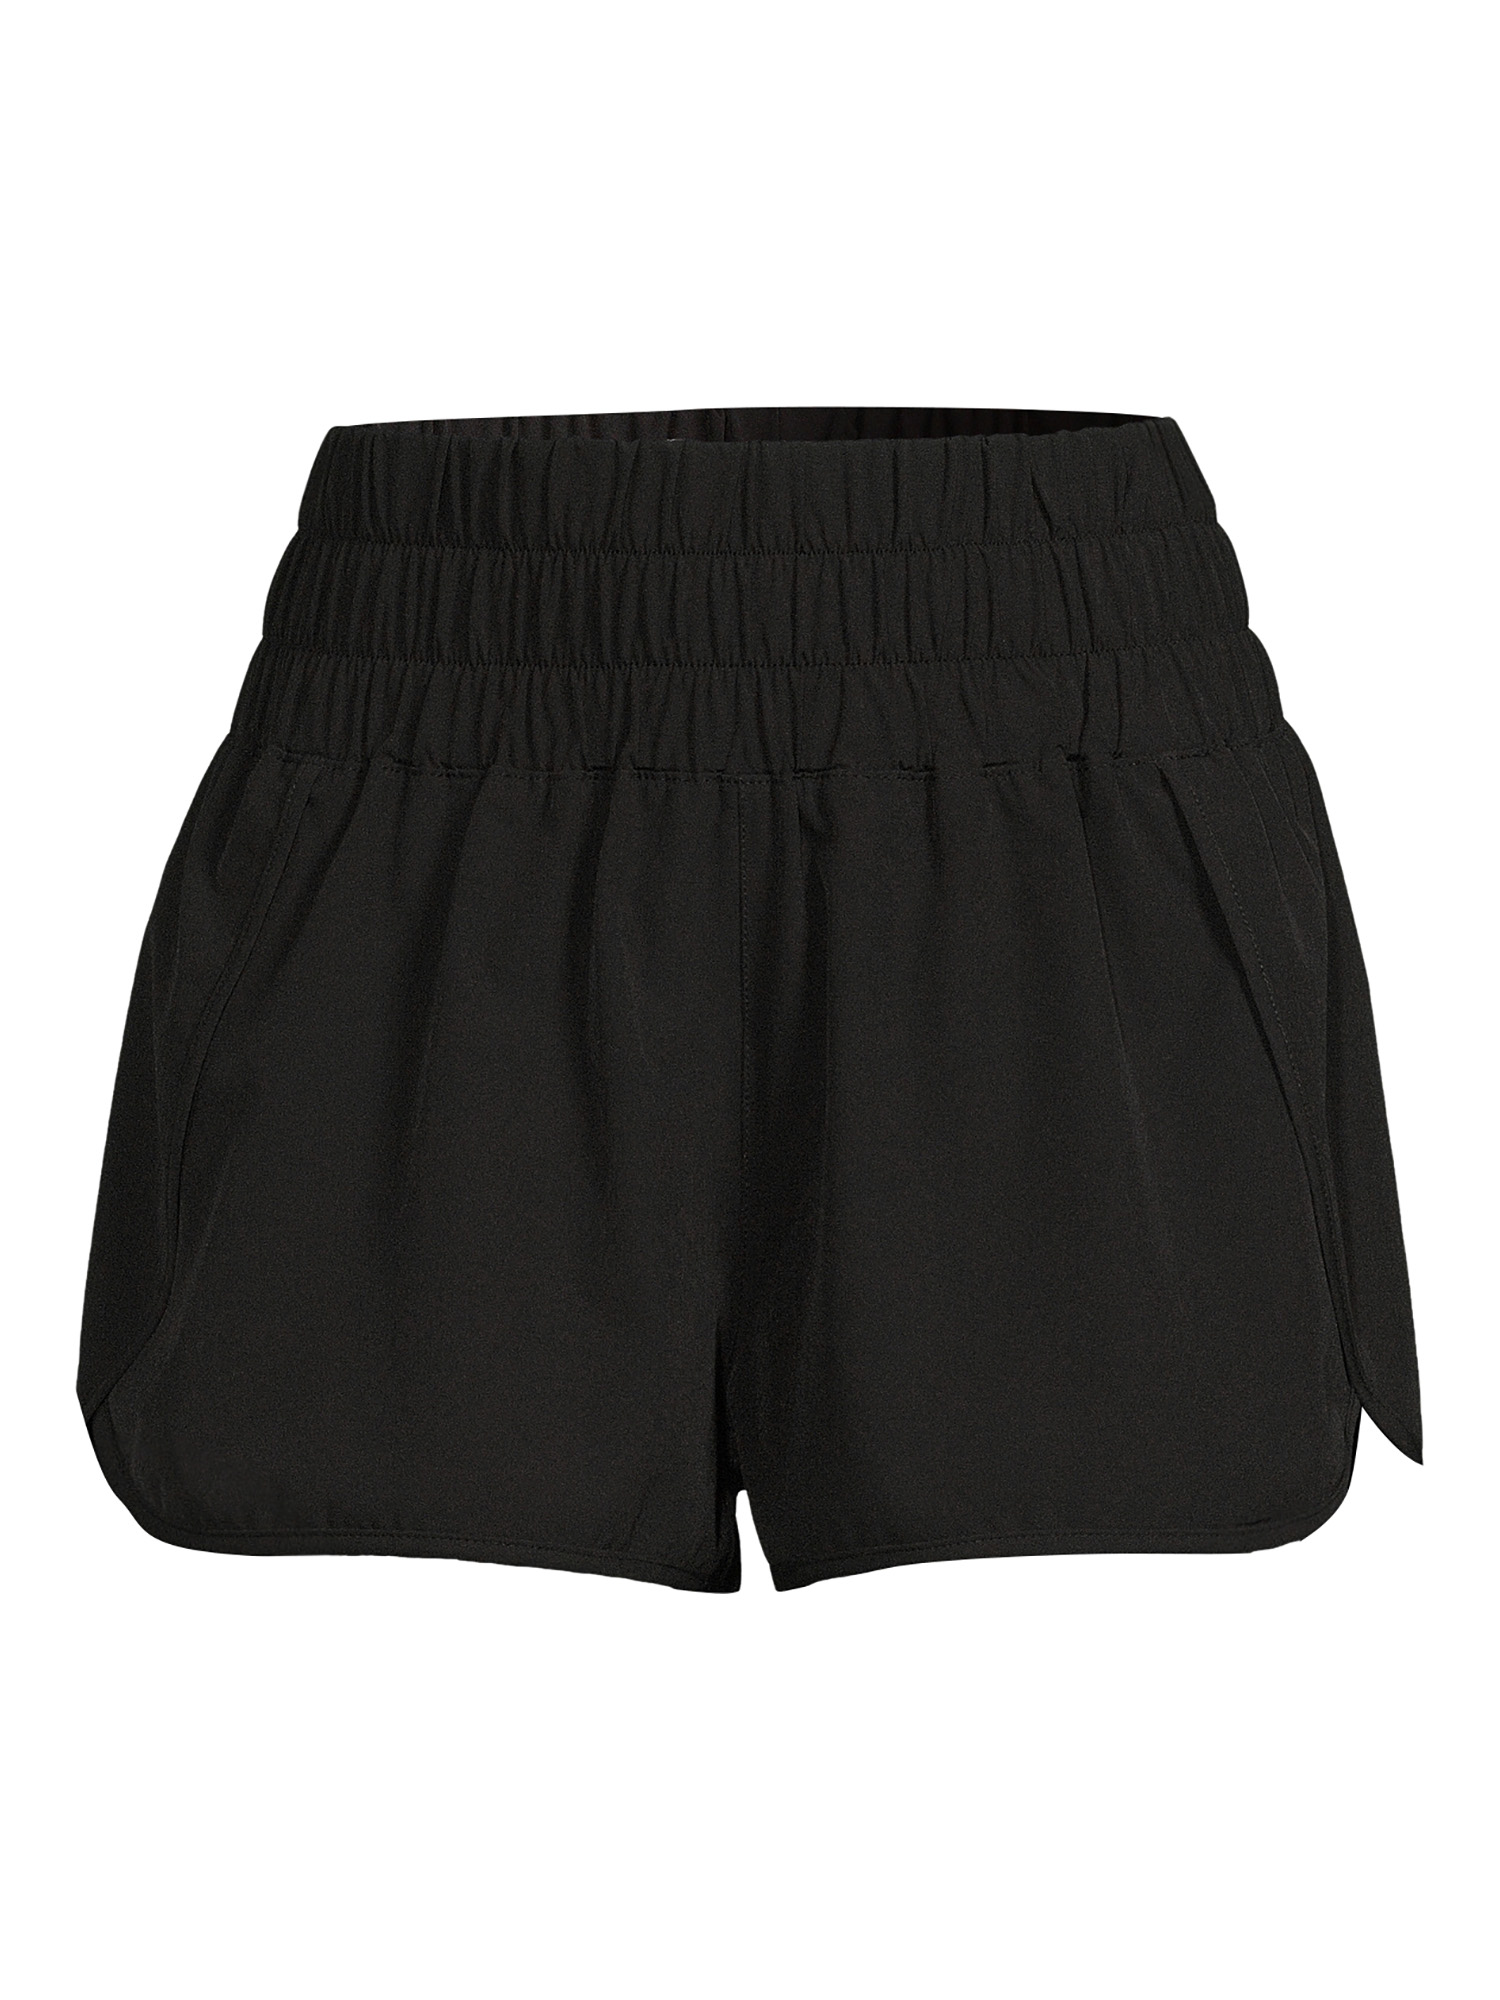 No Boundaries Juniors Smocked Stretch Shorts, Sizes XS-3XL - image 5 of 5